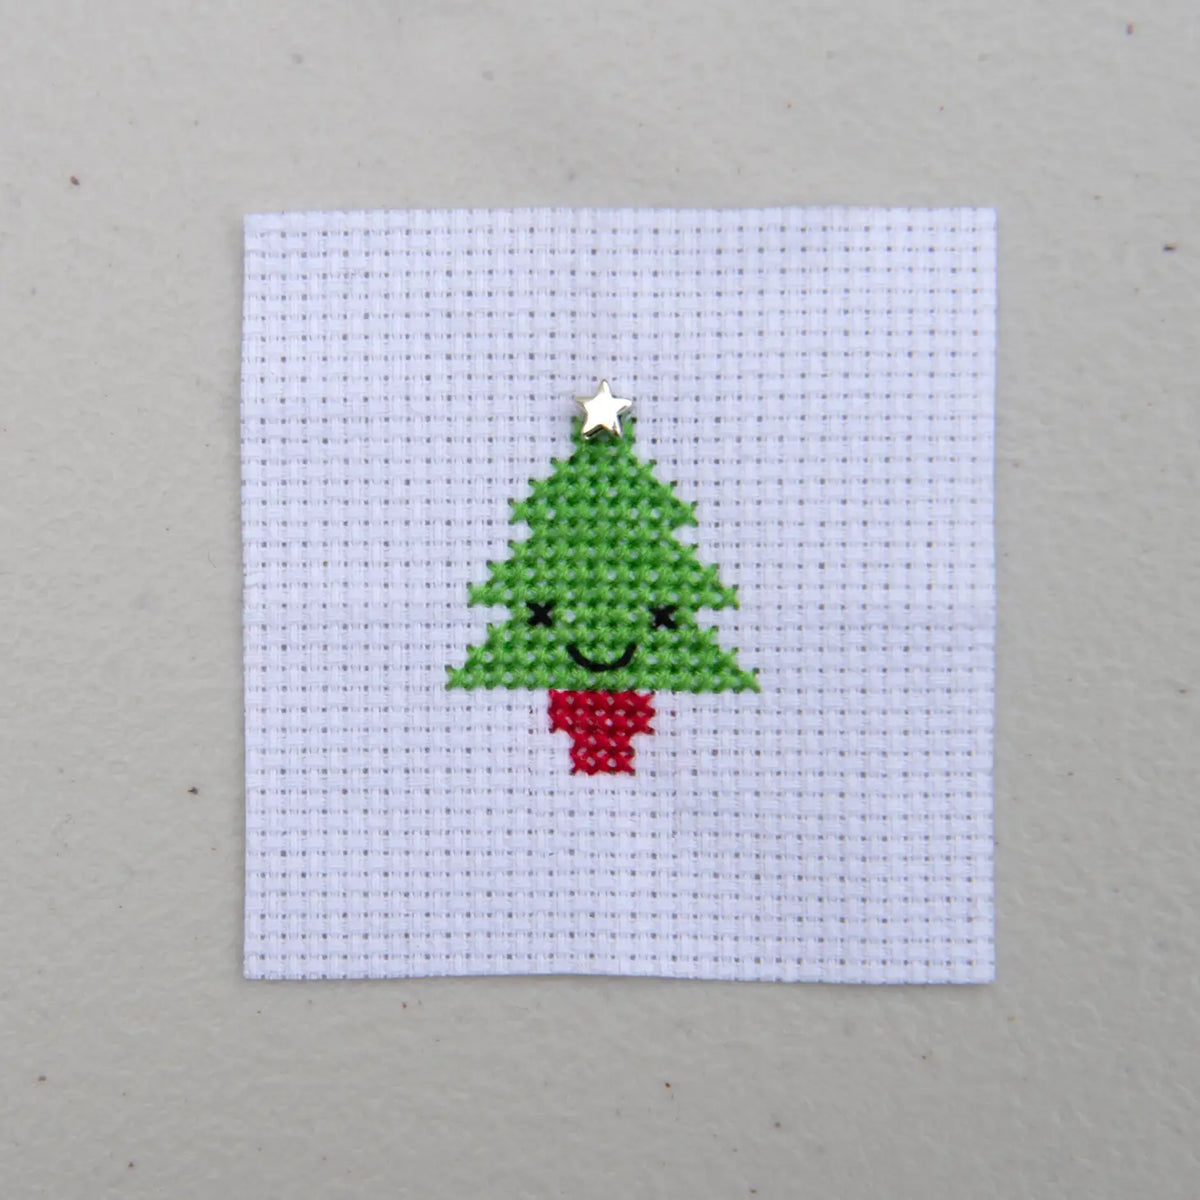 Christmas Tree | Kawaii Kross Stitch in a Matchbox